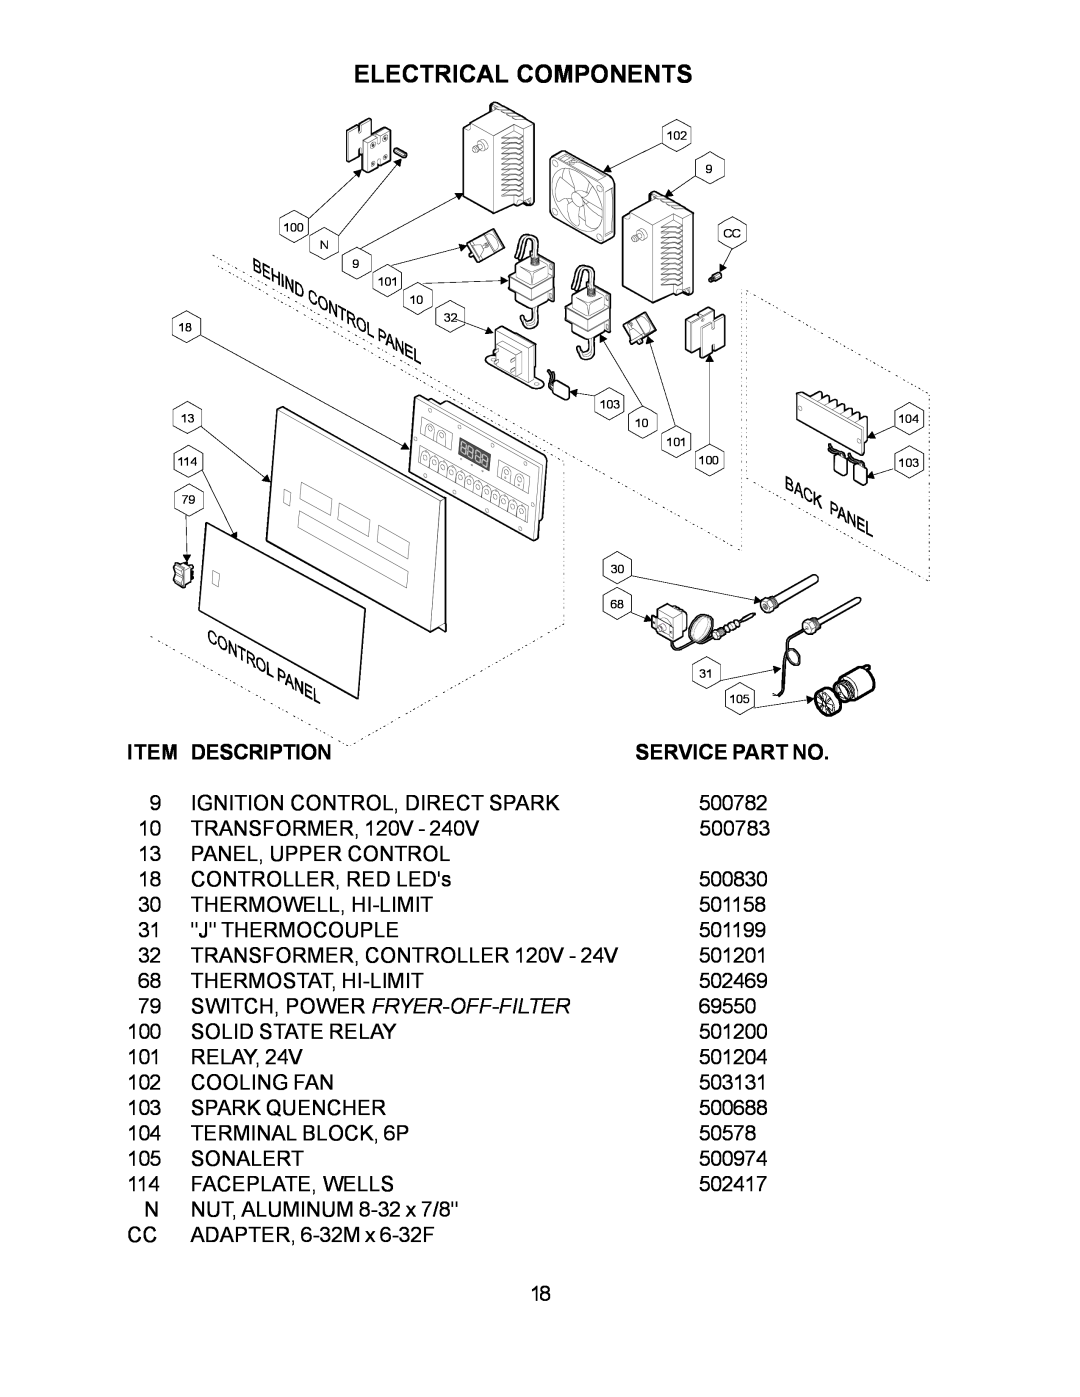 Wells WFGA-60FS service manual Electrical Components, Switch, Power Fryer-Off-Filter, Item Description 